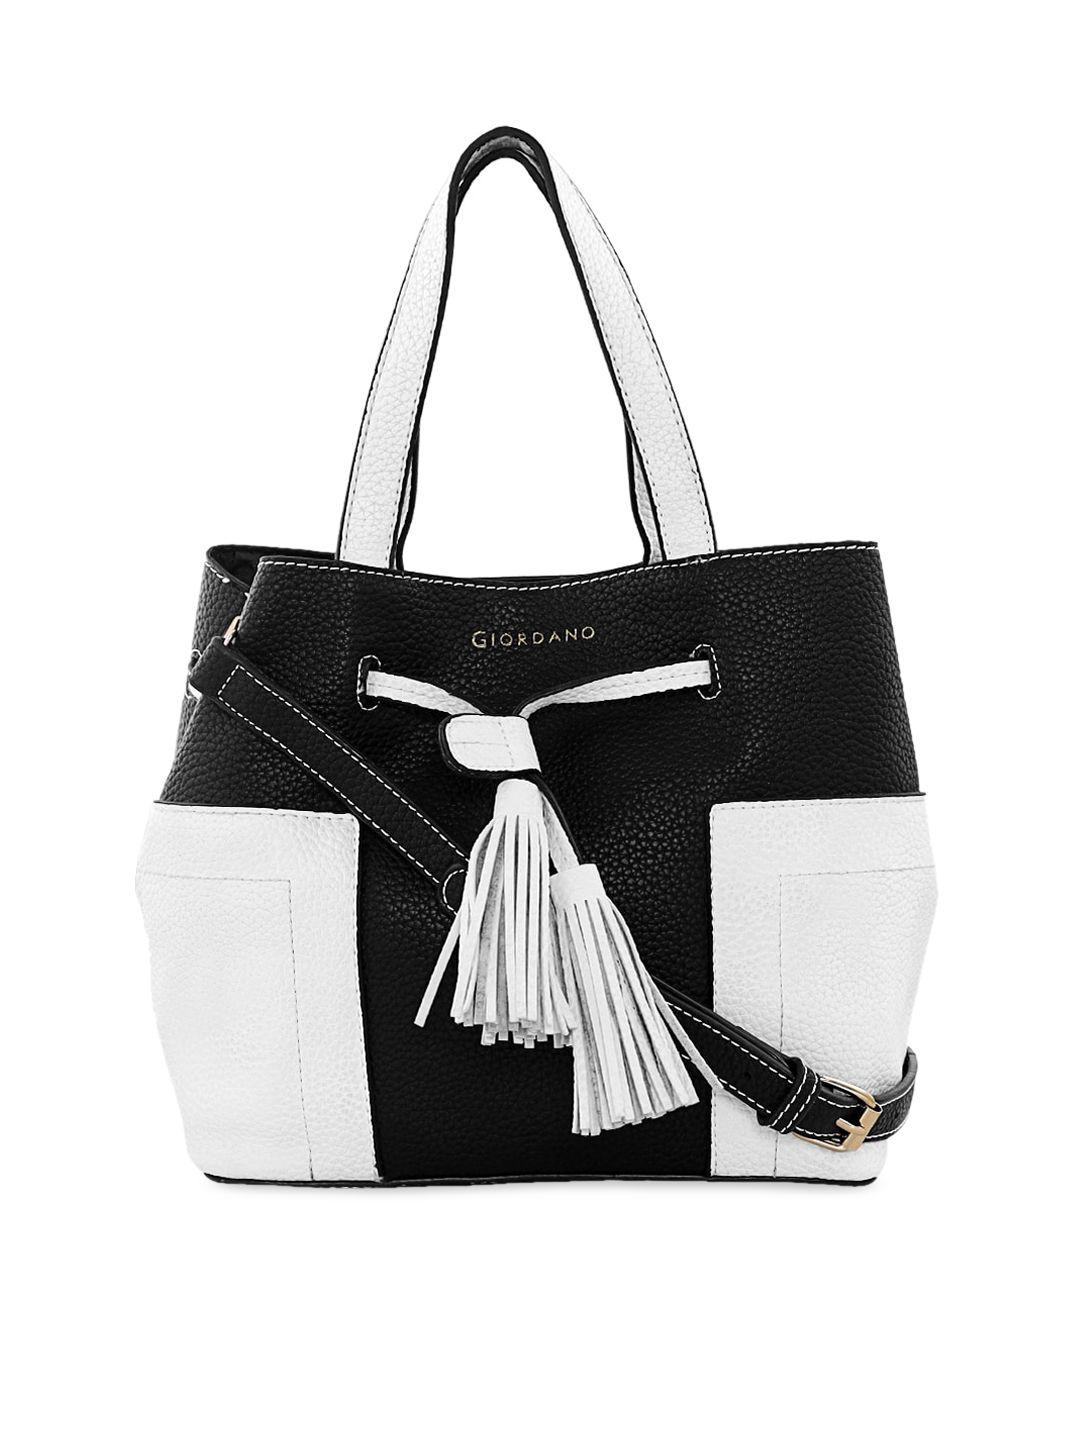 giordano white & black colourblocked shoulder bag